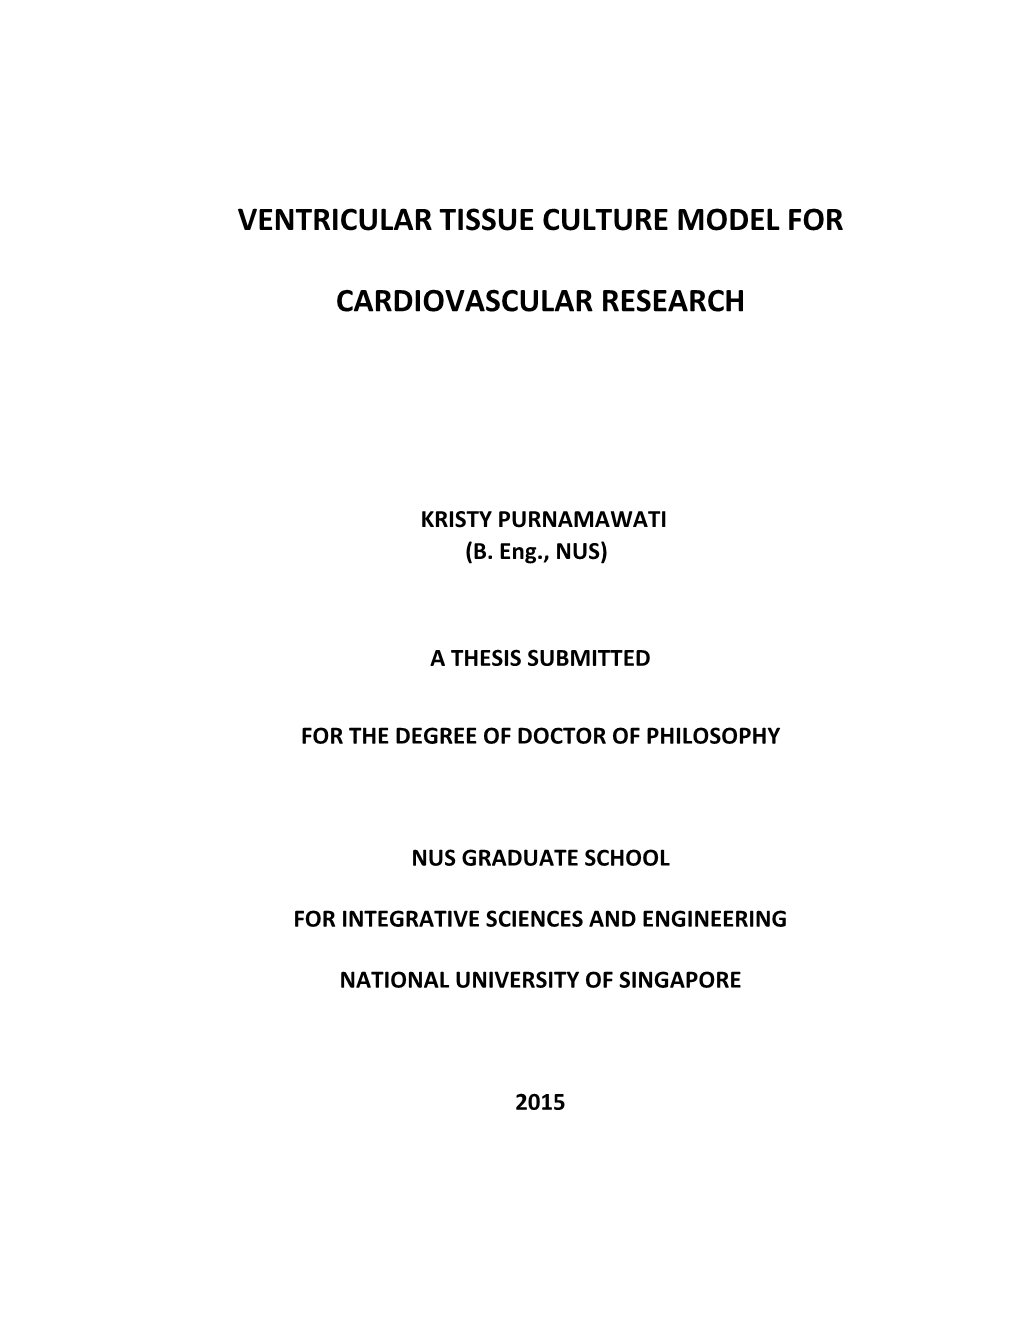 Ventricular Tissue Culture Model for Cardiovascular